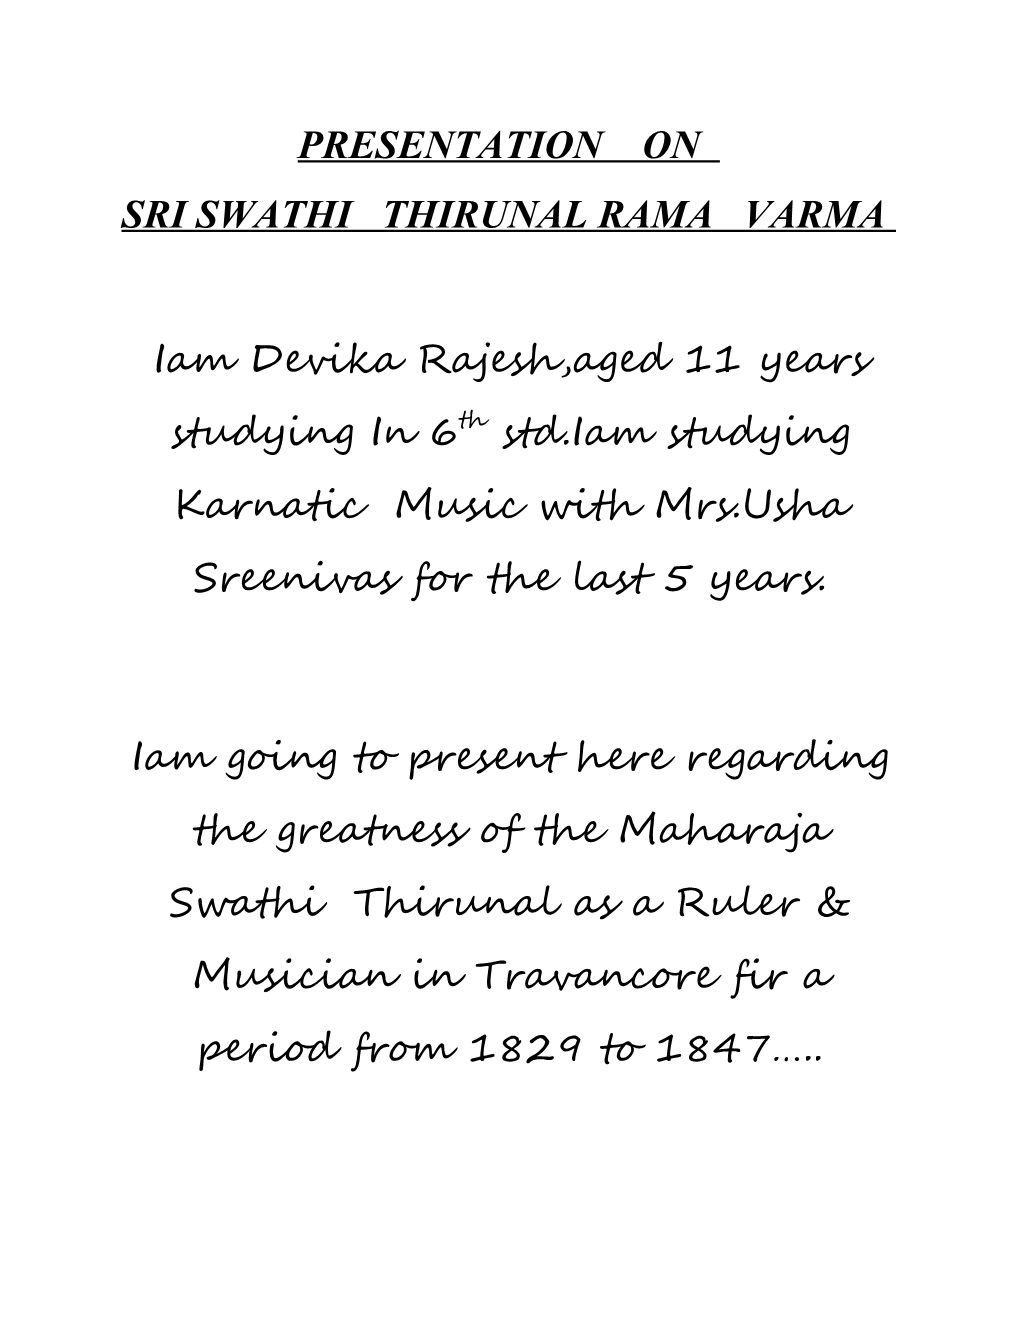 Sri Swathi Thirunal Rama Varma